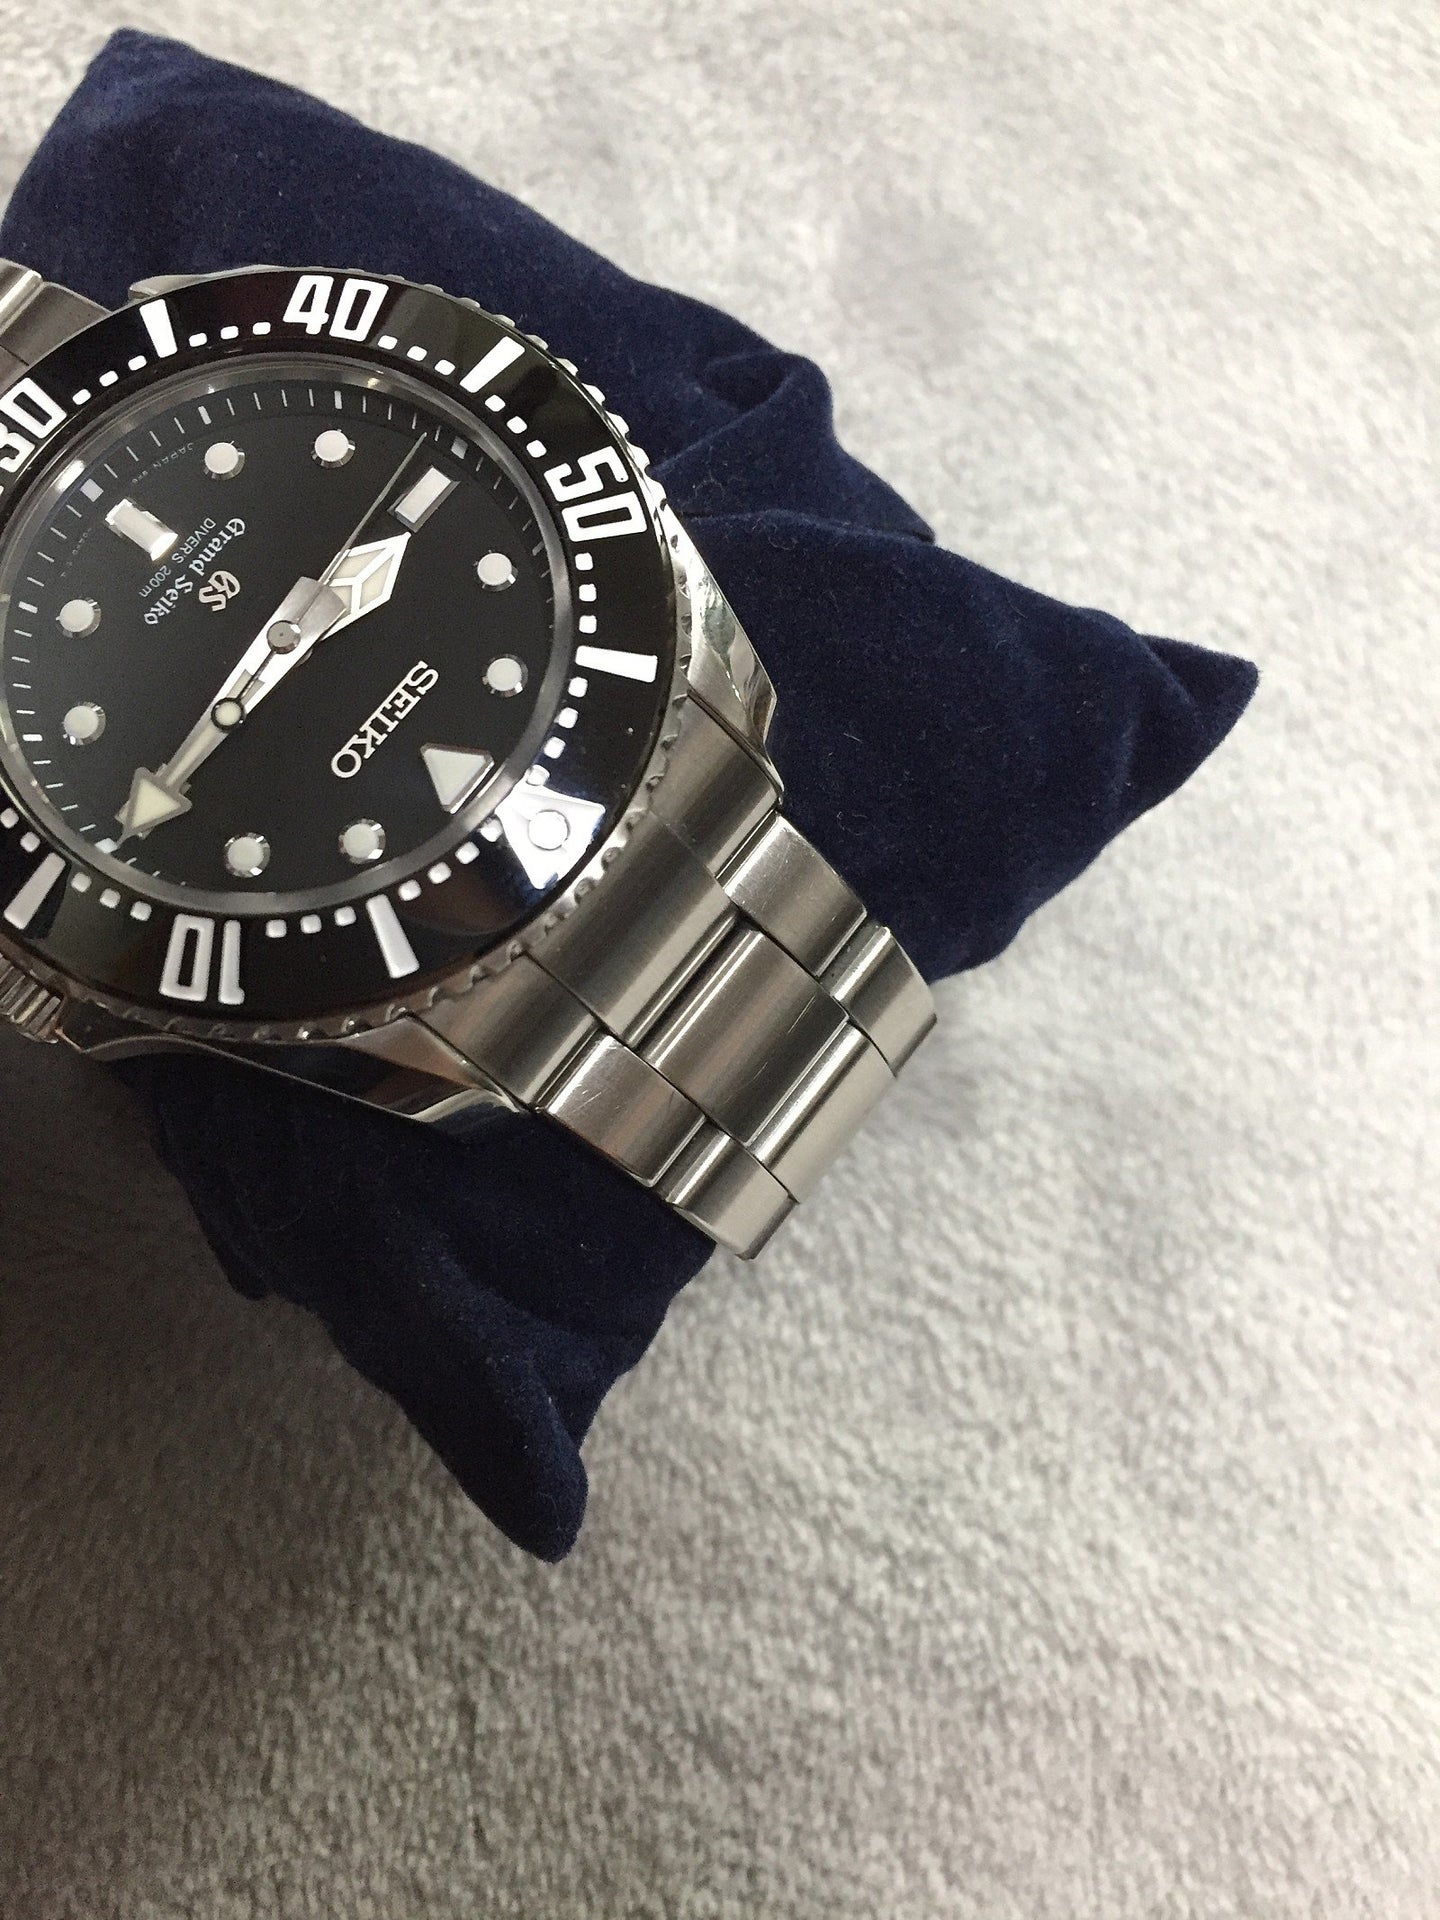 FS : Grand Seiko Diver SBGX117 9F Quartz | WatchUSeek Watch Forums